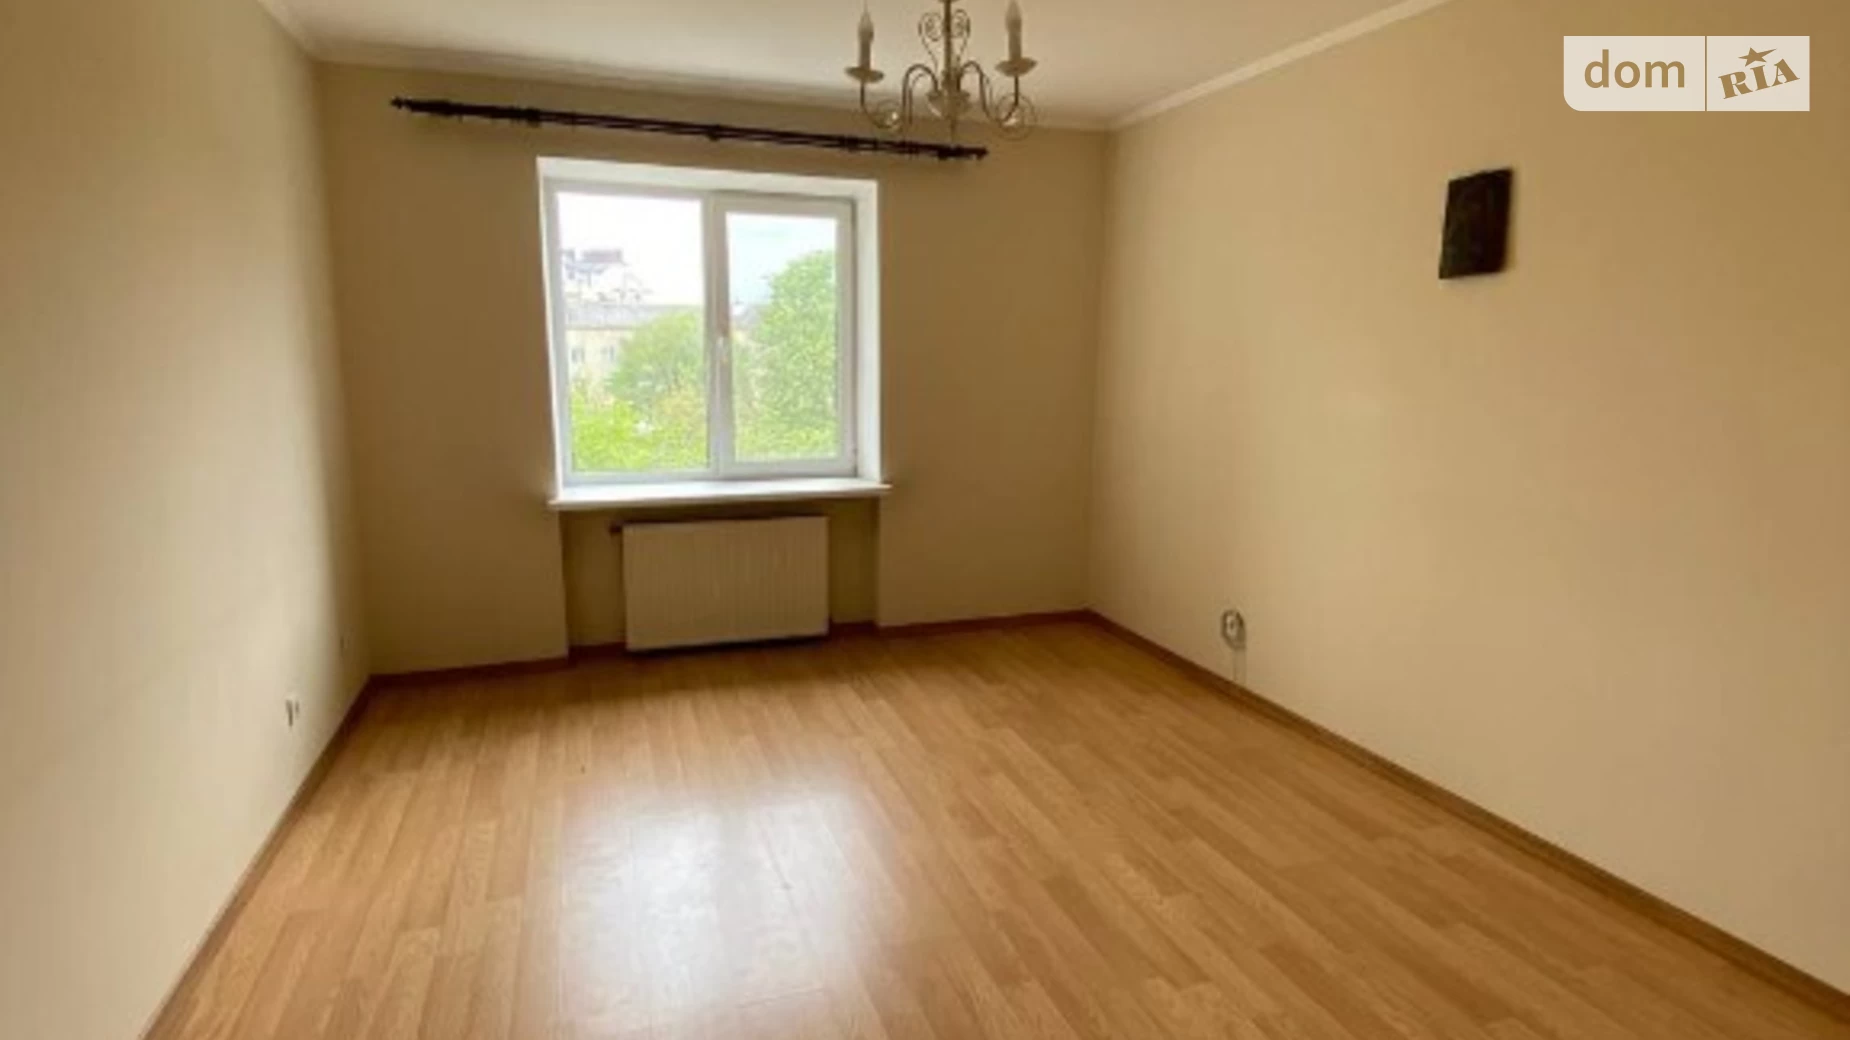 Продается 5-комнатная квартира 163.8 кв. м в Ивано-Франковске - фото 4